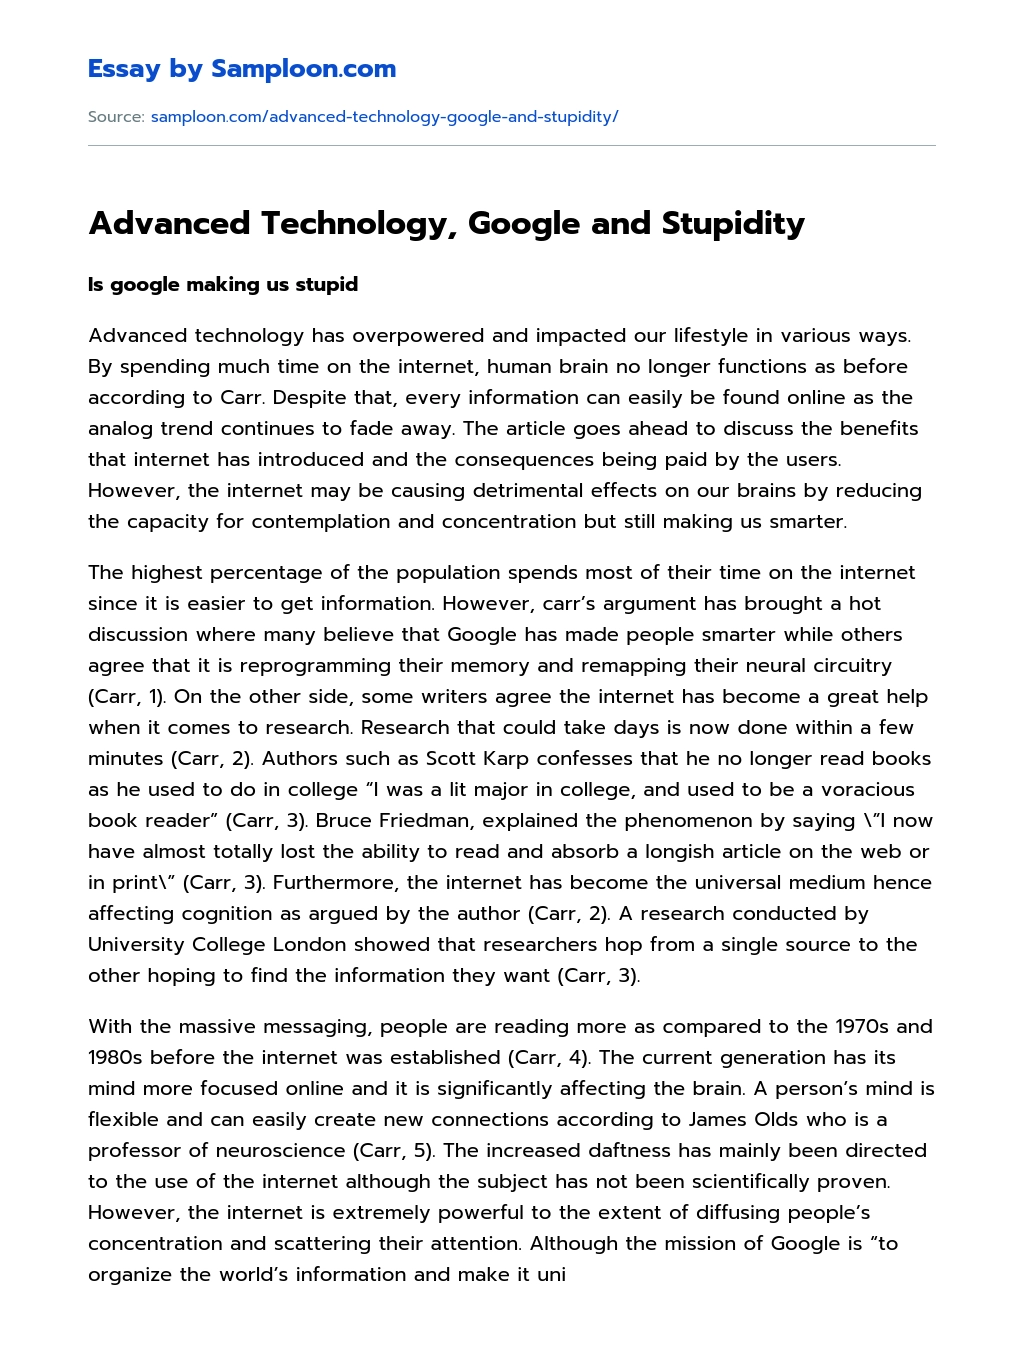 Advanced Technology, Google and Stupidity essay